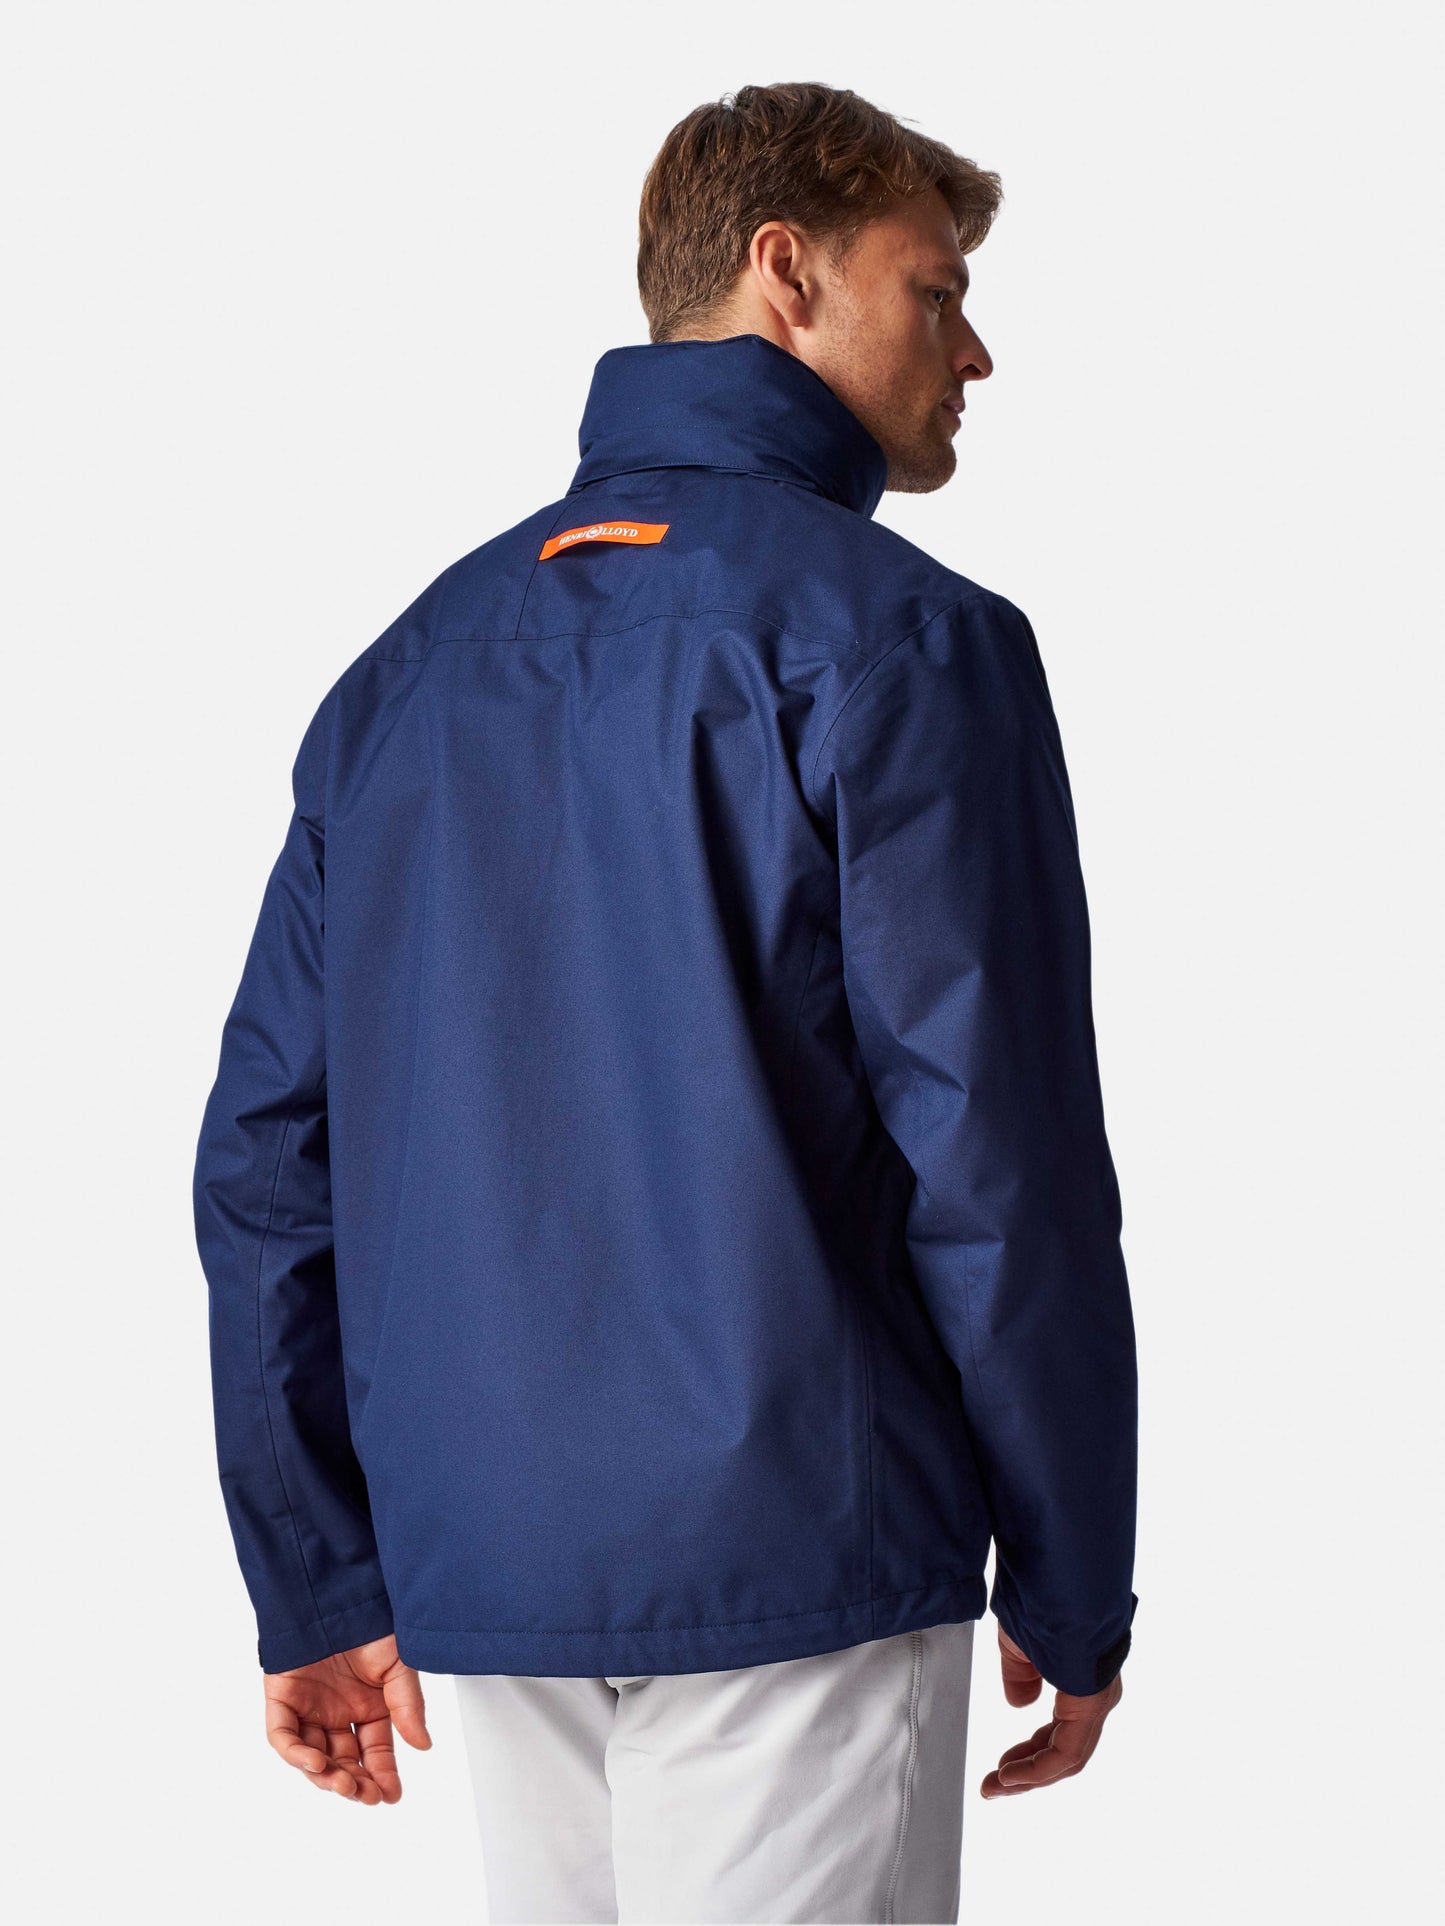 Men's Cool Breeze Jacket - Navy Blue